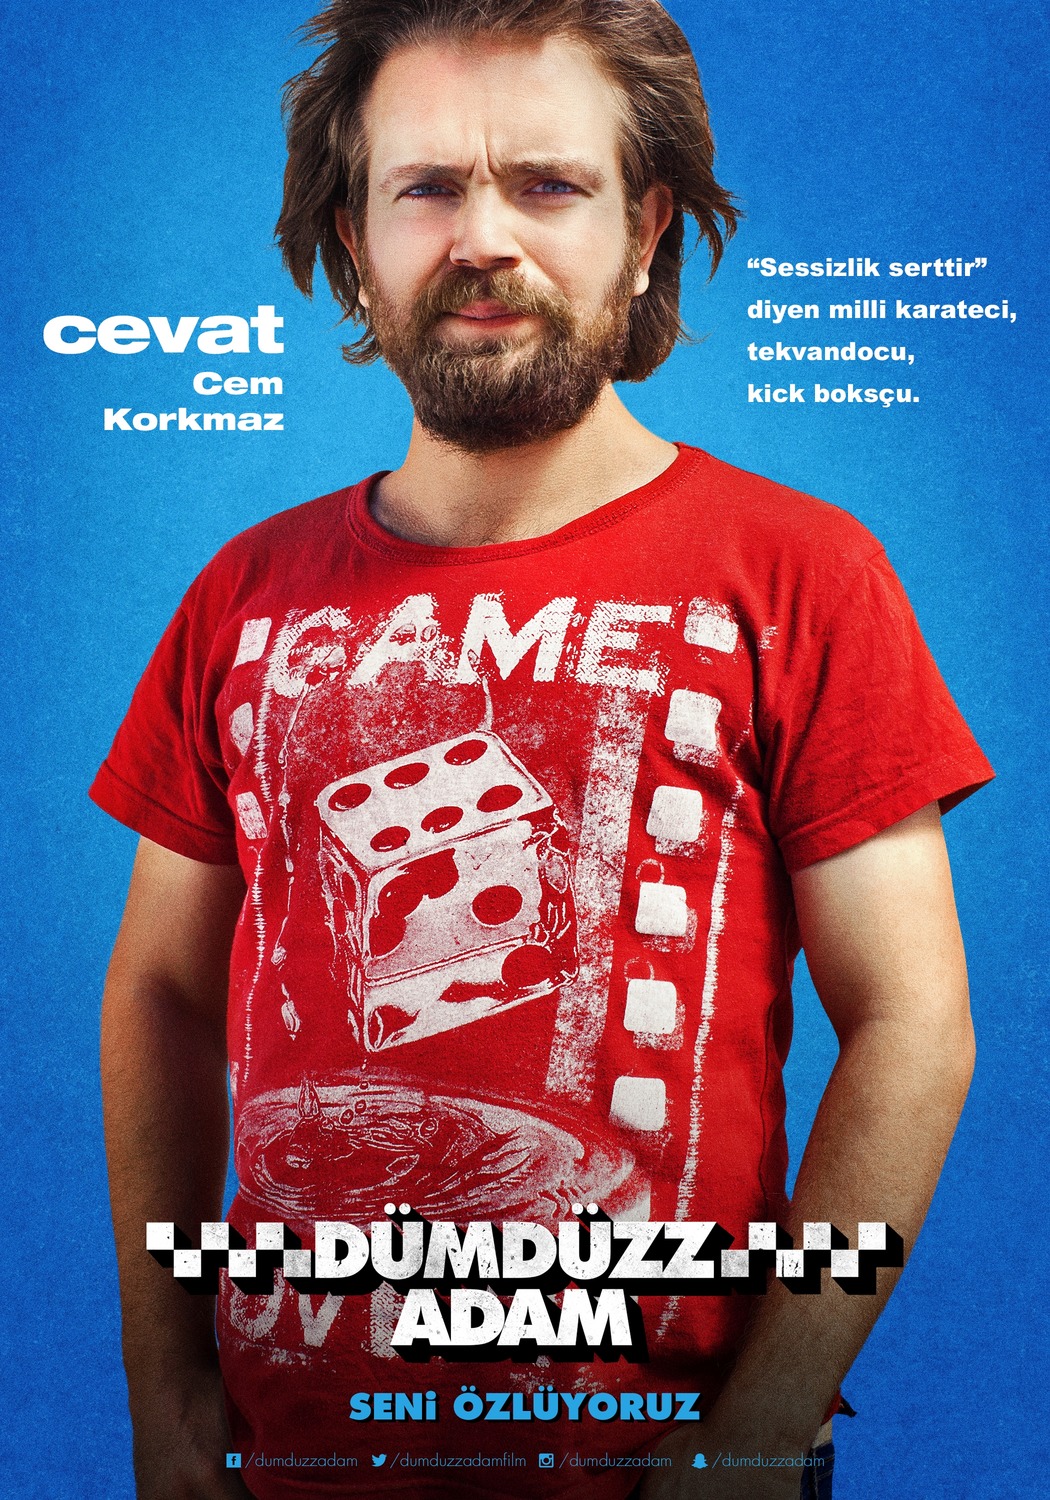 Extra Large Movie Poster Image for Dümdüzz Adam (#10 of 16)